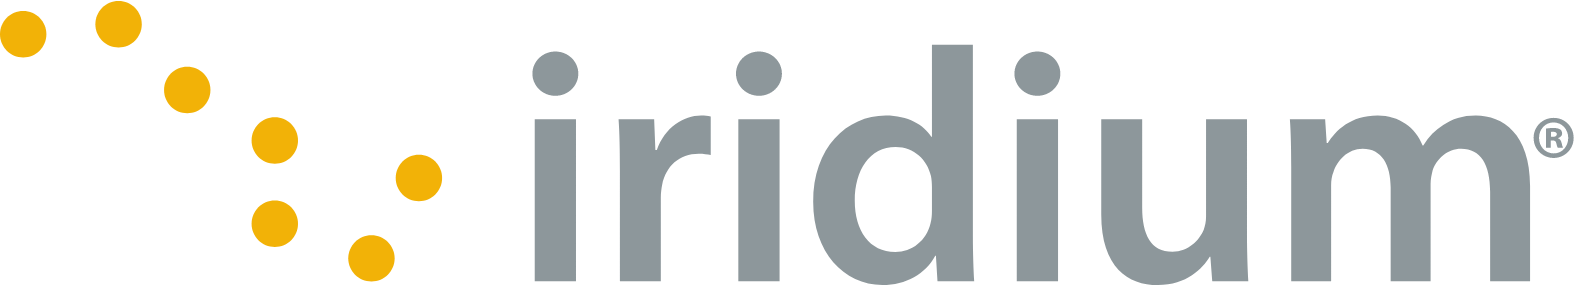 Iridium Communications logo large (transparent PNG)